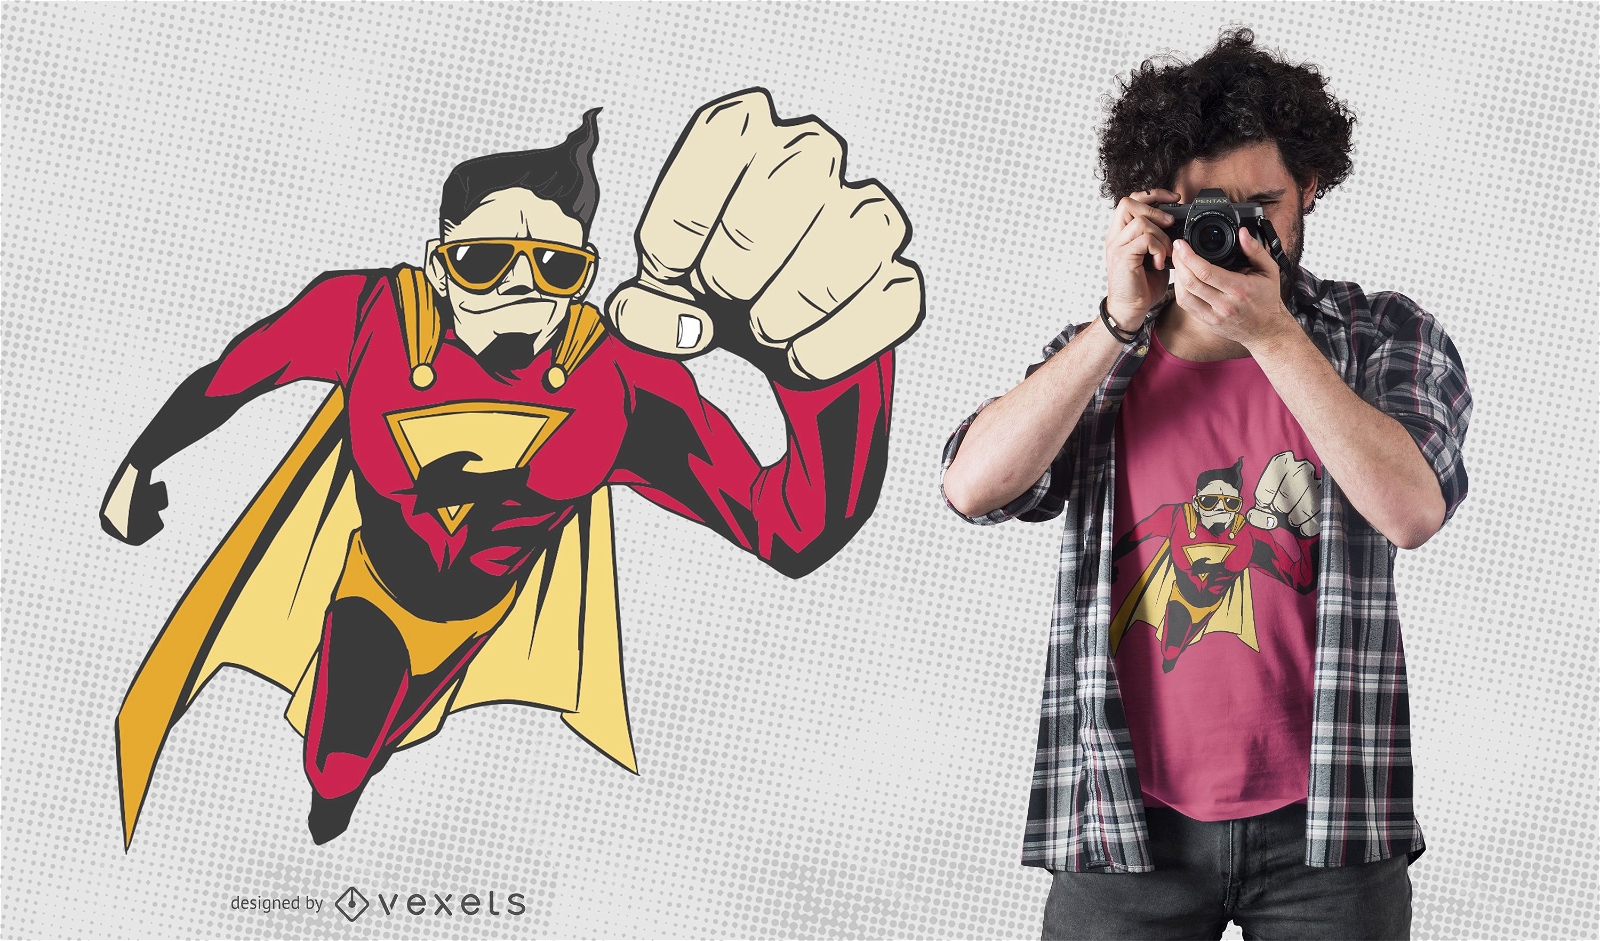 Cool superhero t-shirt design